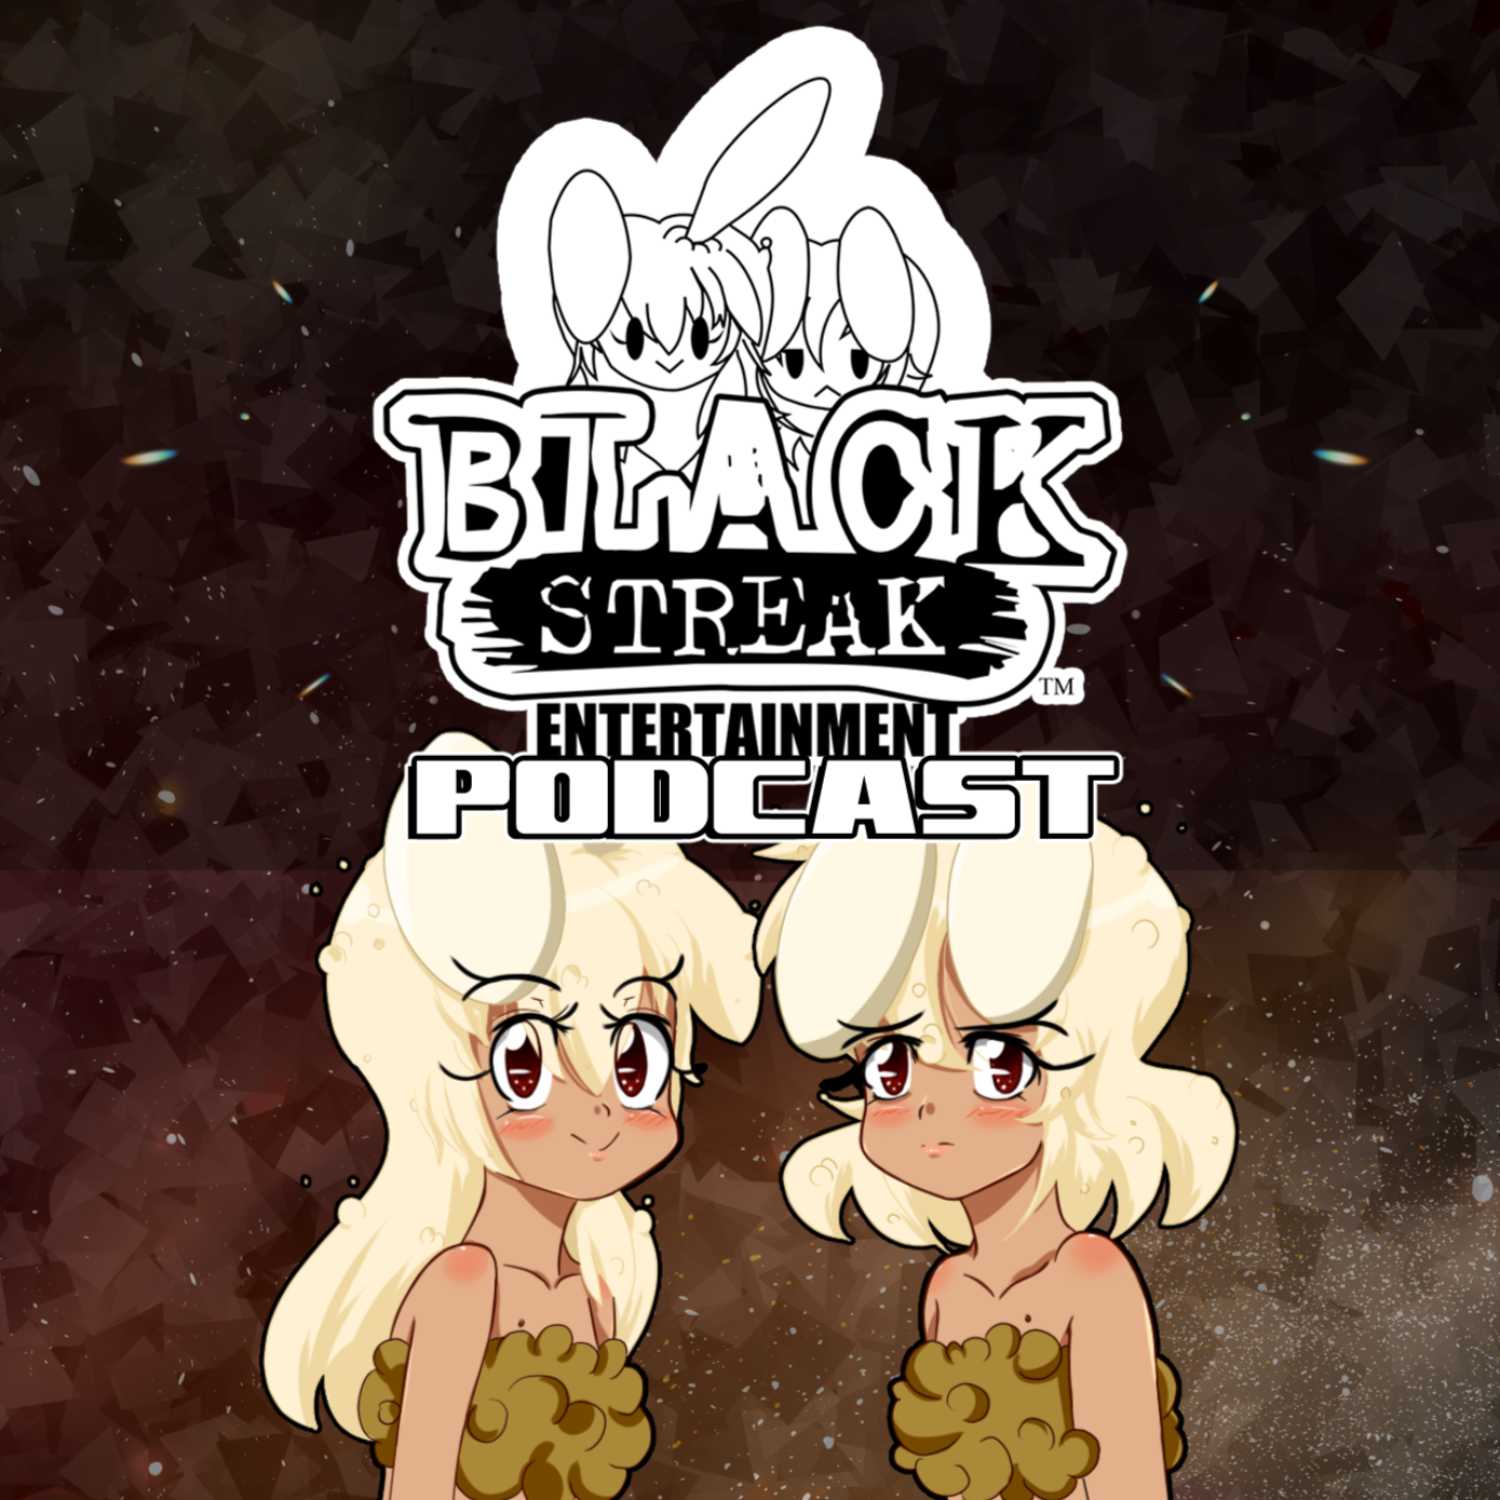 The Black Streak Entertainment Podcast